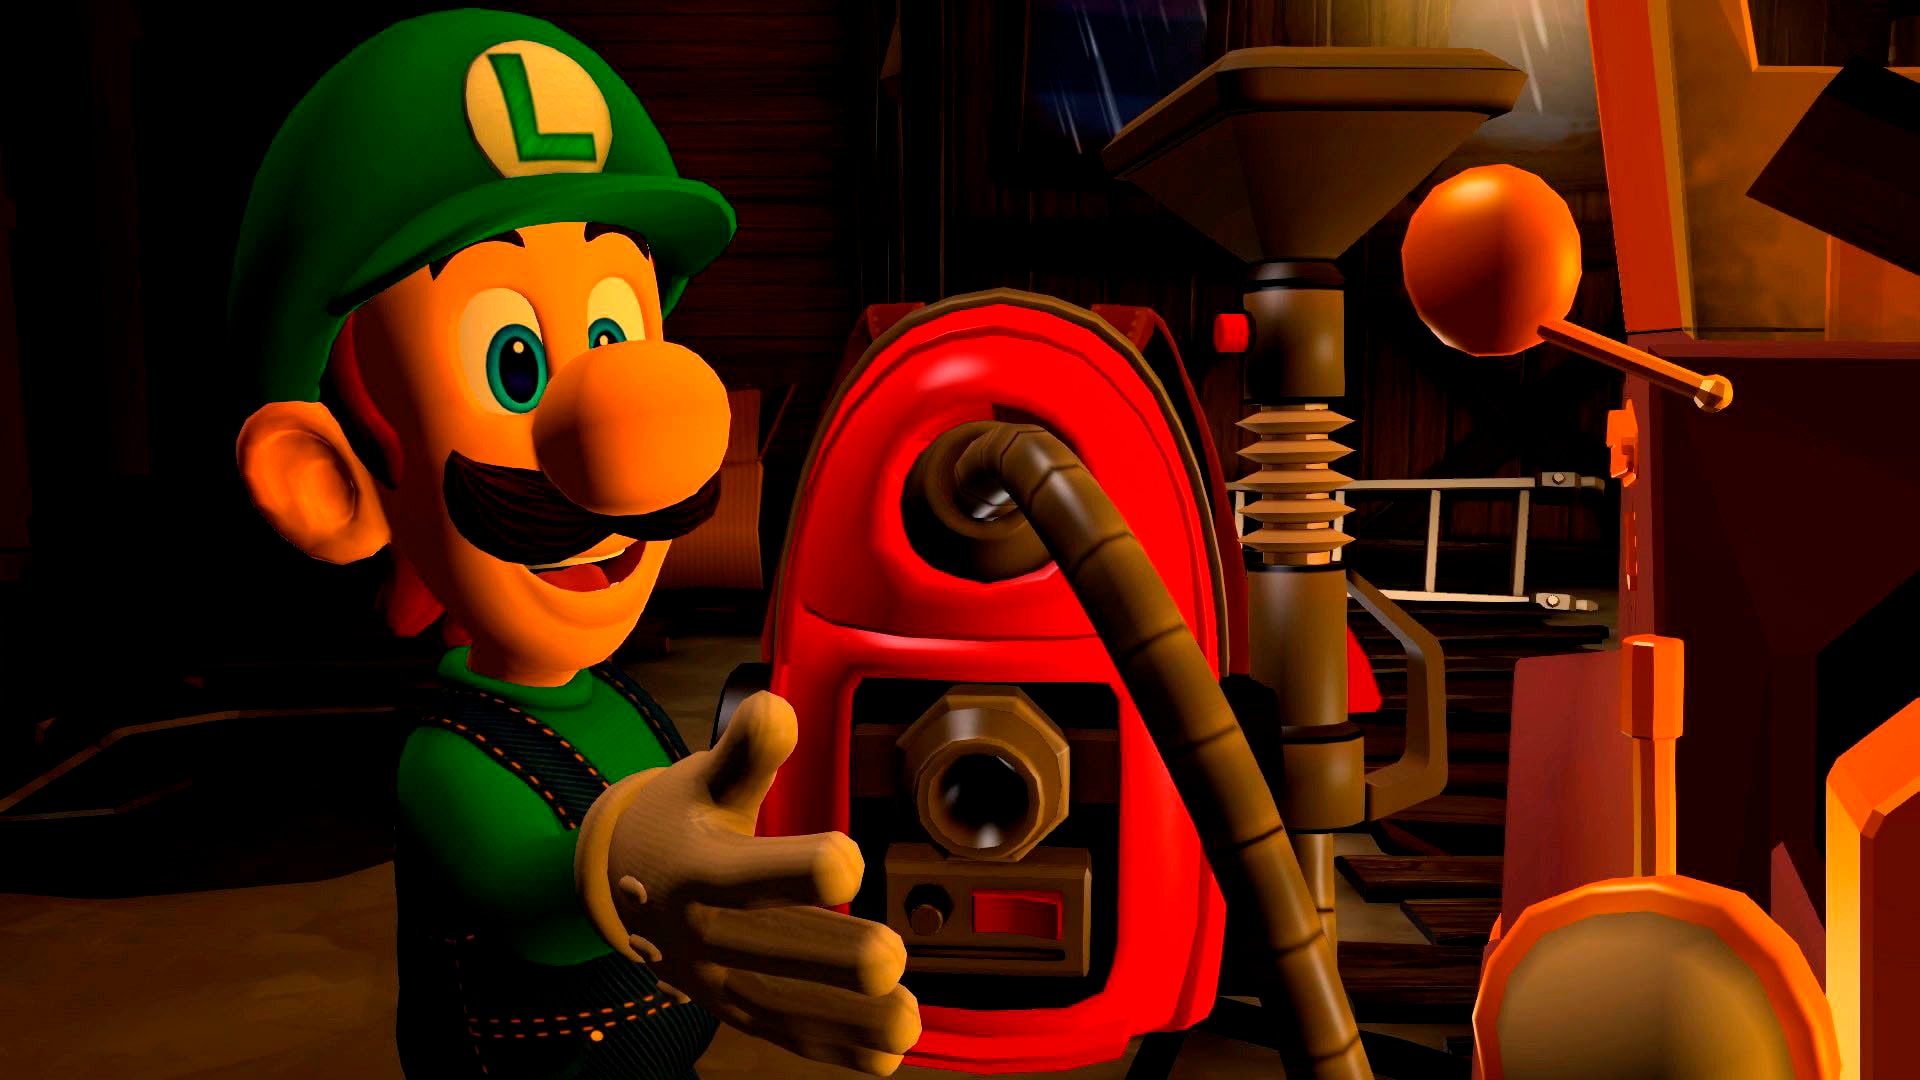 Nintendo Switch Spielekonsole »OLED + Luigi's Mansion 2 HD«